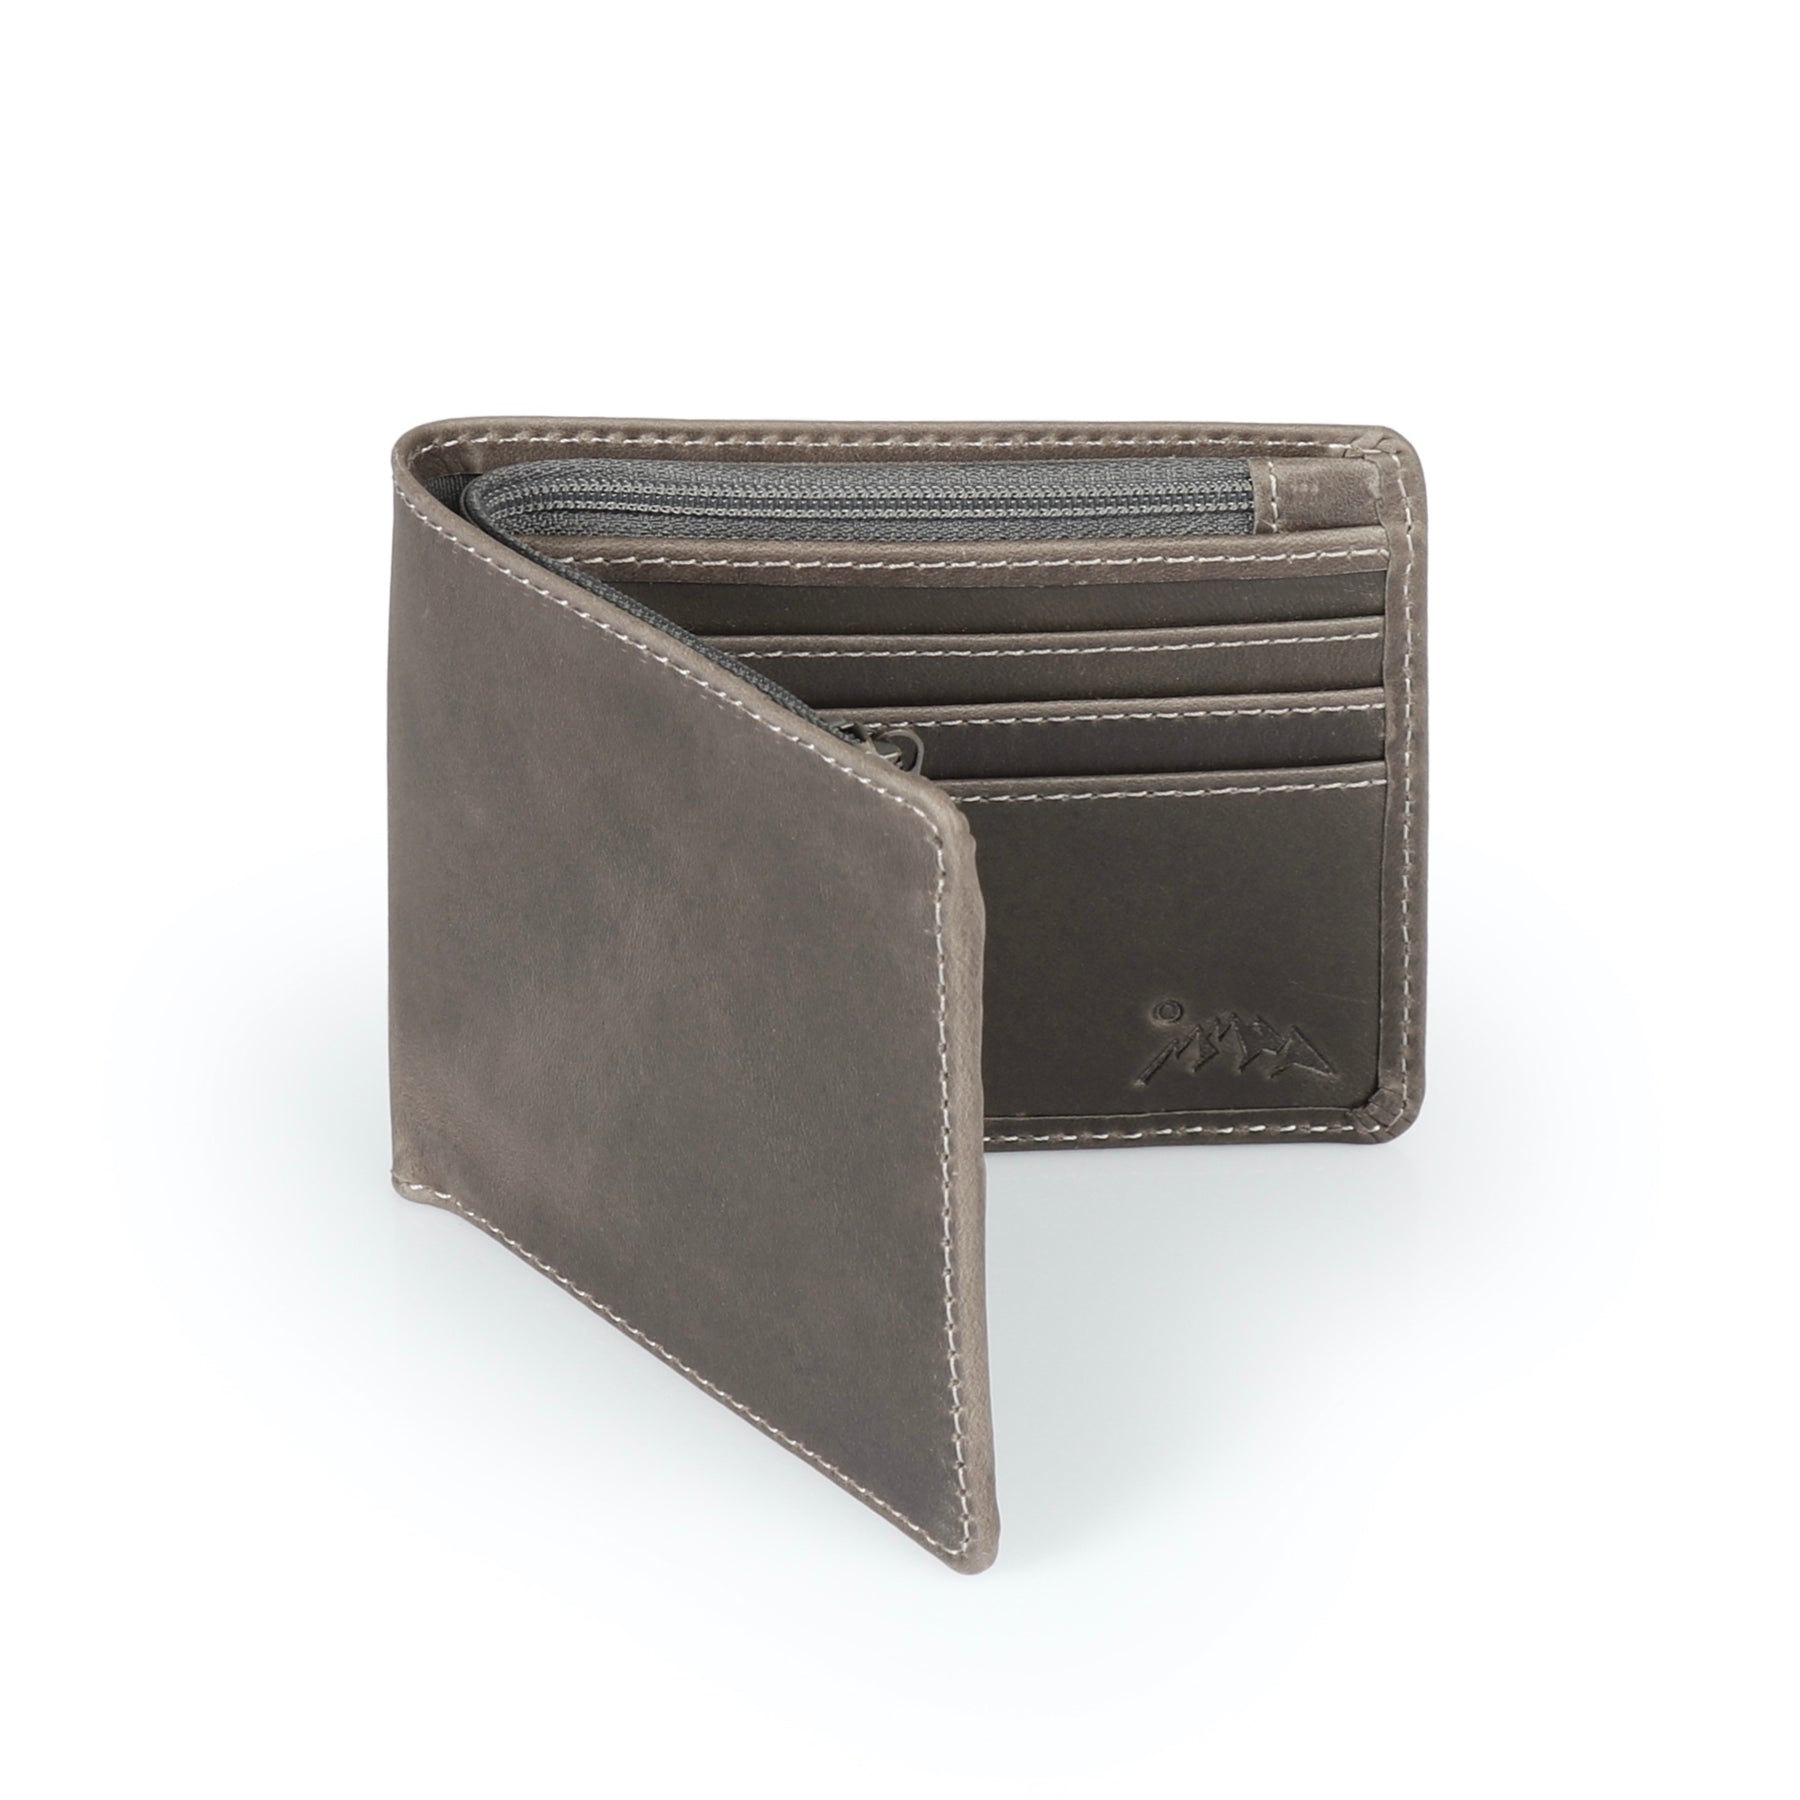 MWS-W013 Genuine Leather Spiritual Collection Men's Wallet – MONTANA WEST  U.S.A